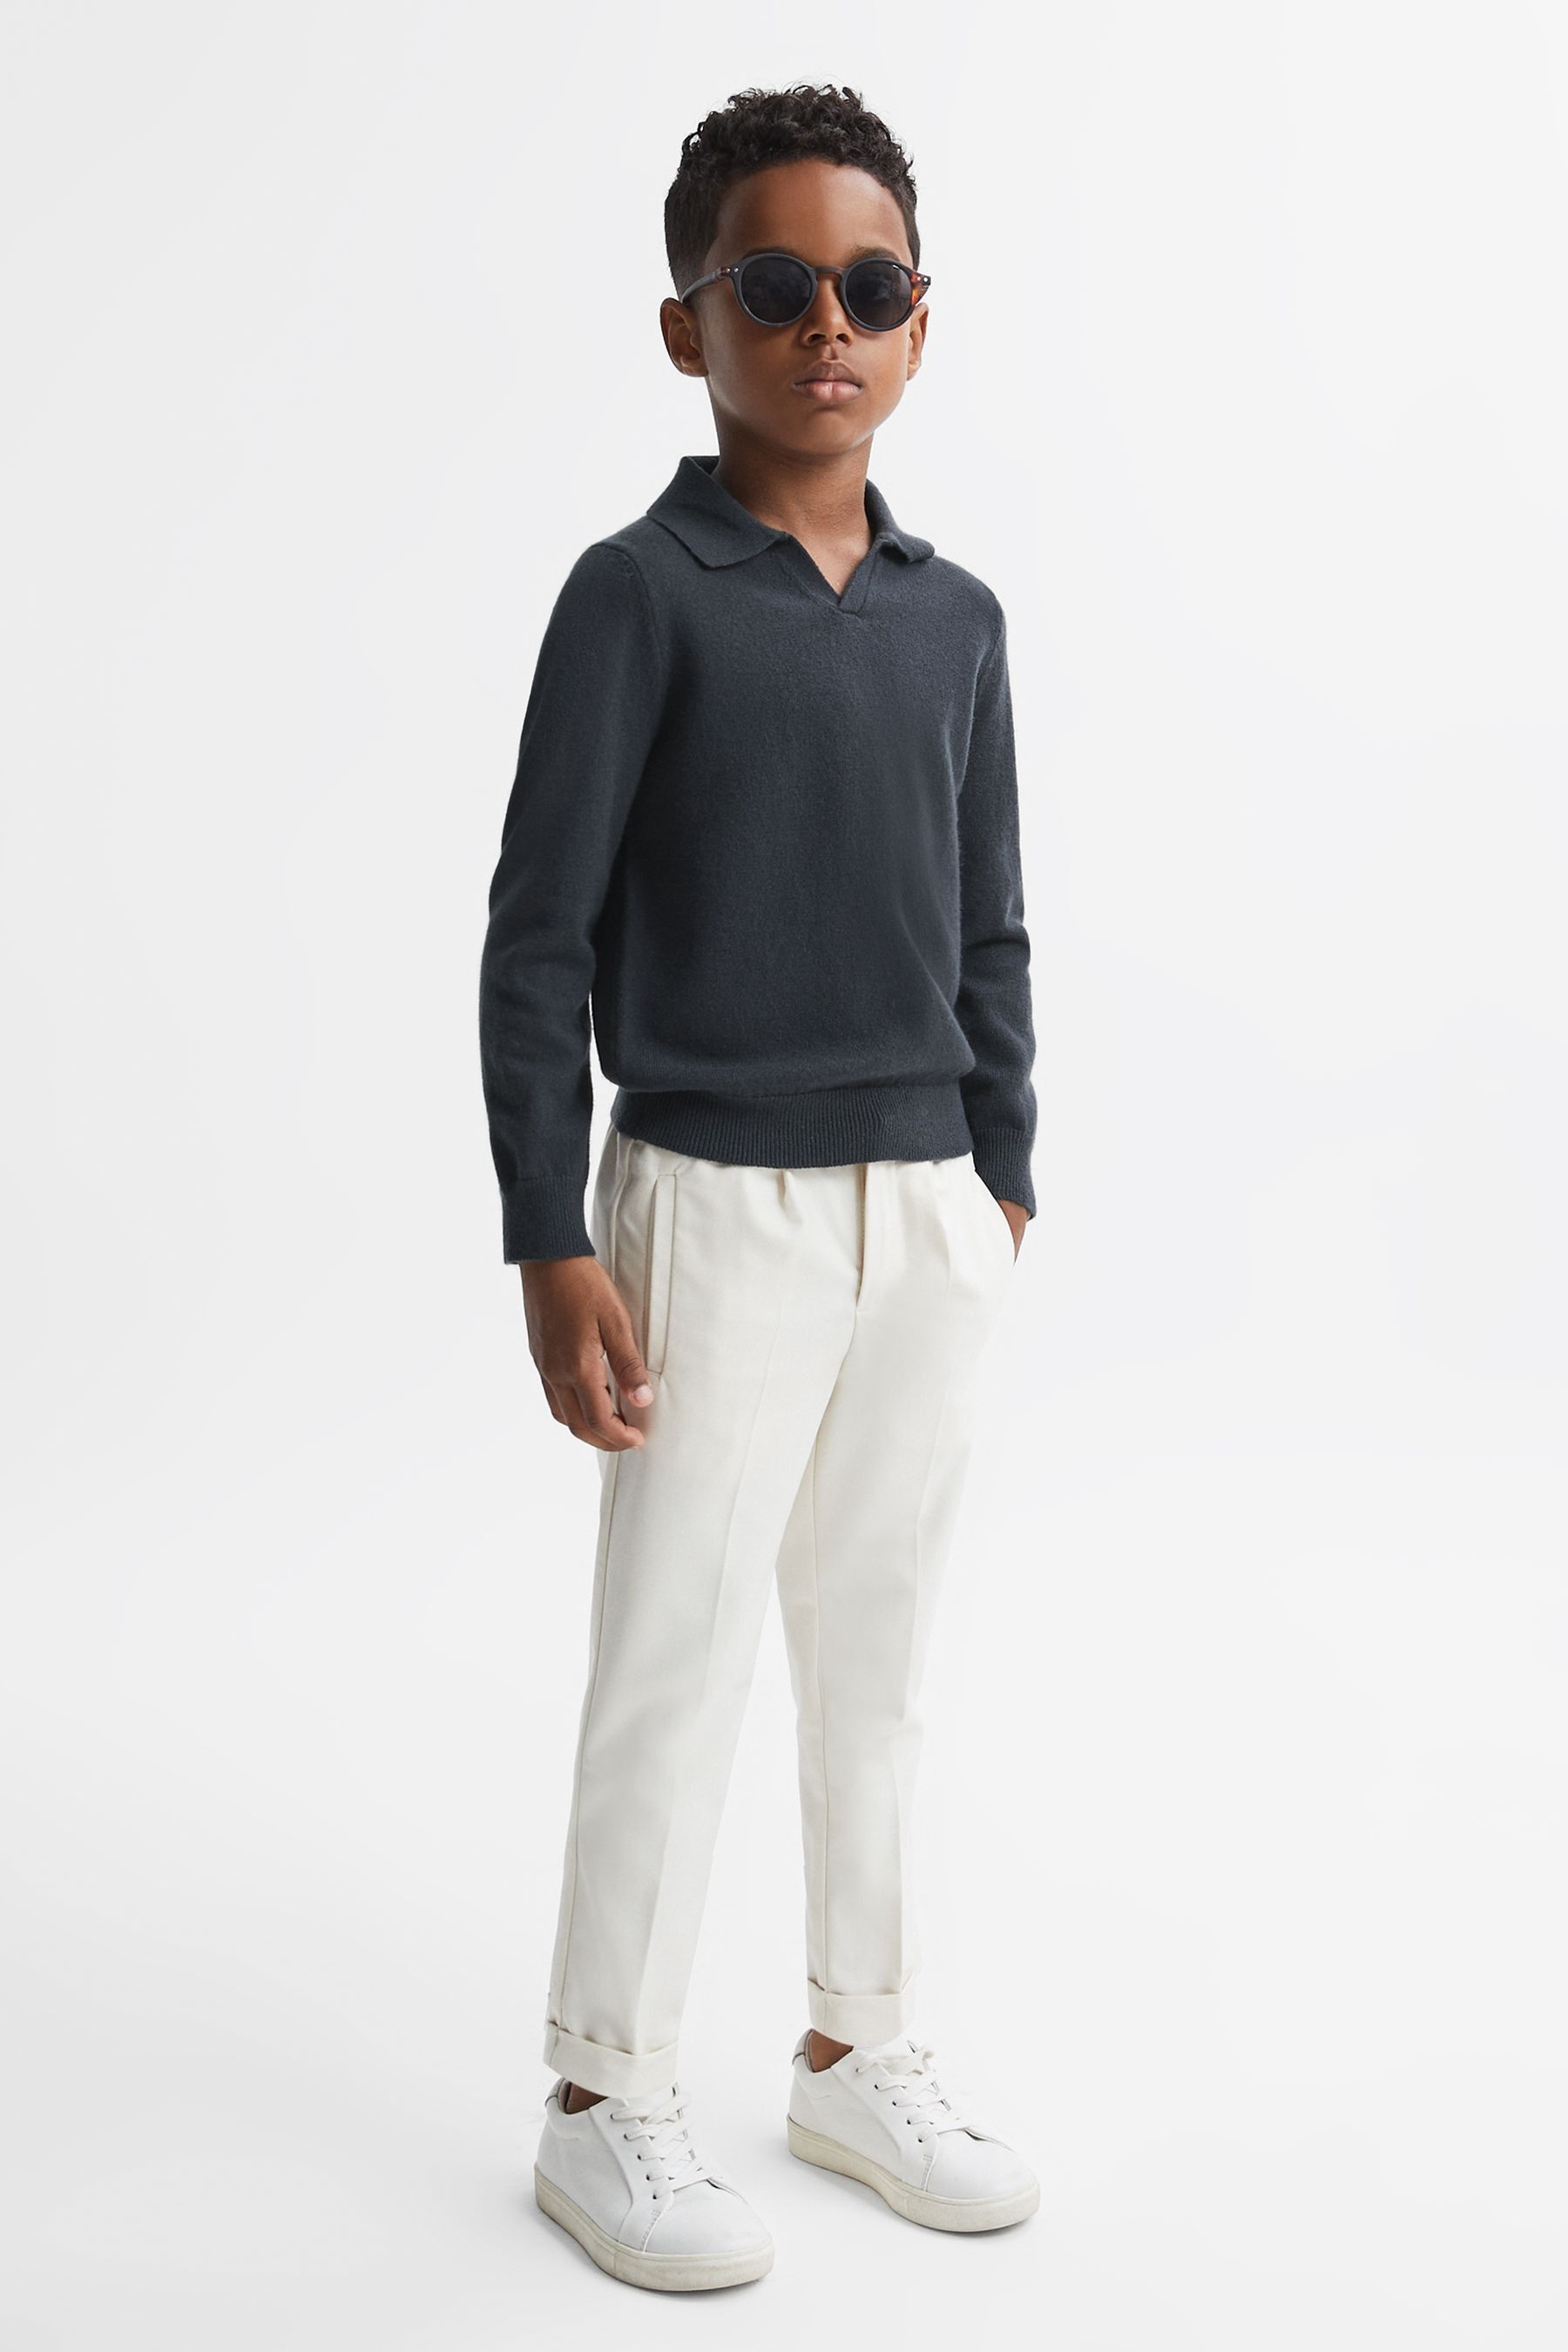 Reiss Swifts - Anthracite Grey Junior Slim Fit Merino Wool Open Collar Top, Age 8-9 Years